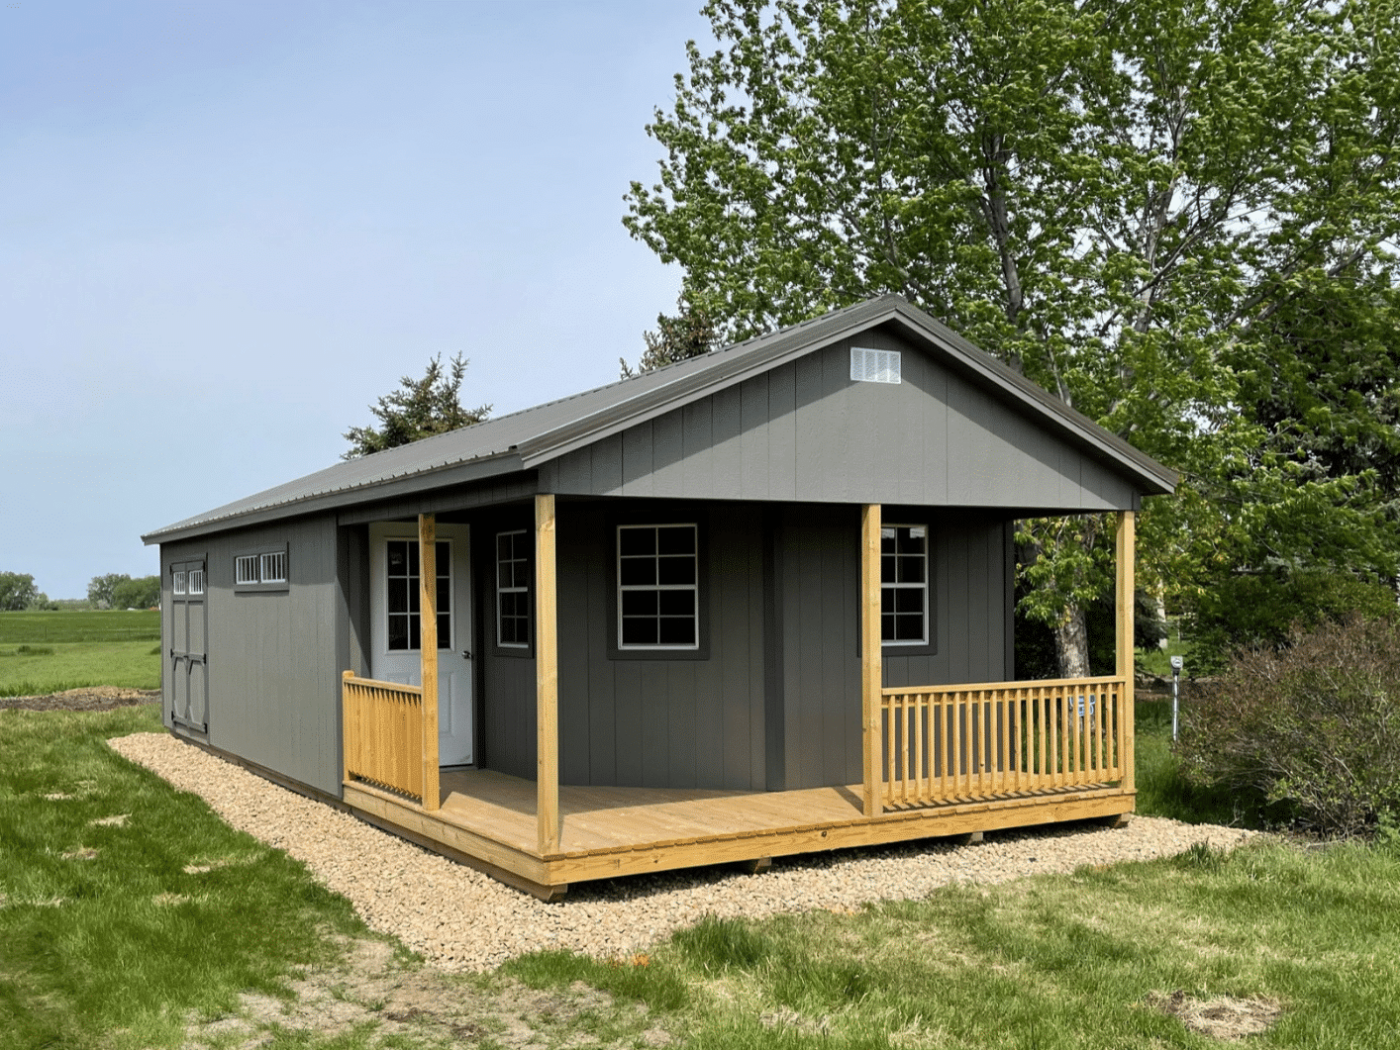 Gray a-frame cabin shed in backyard